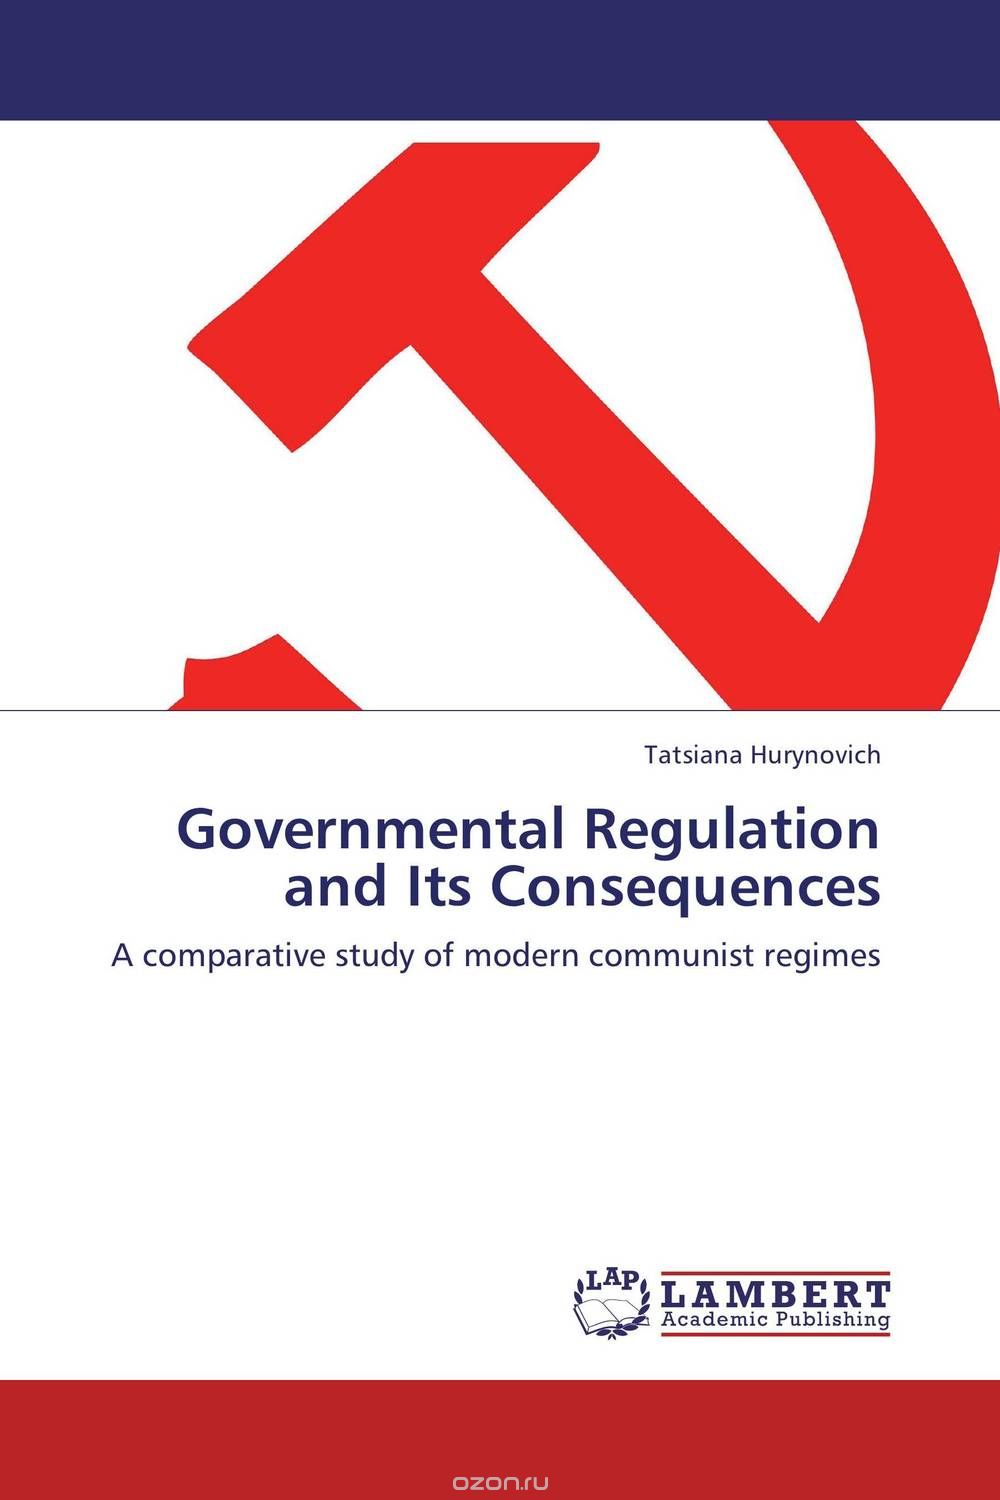 Скачать книгу "Governmental Regulation and Its Consequences"